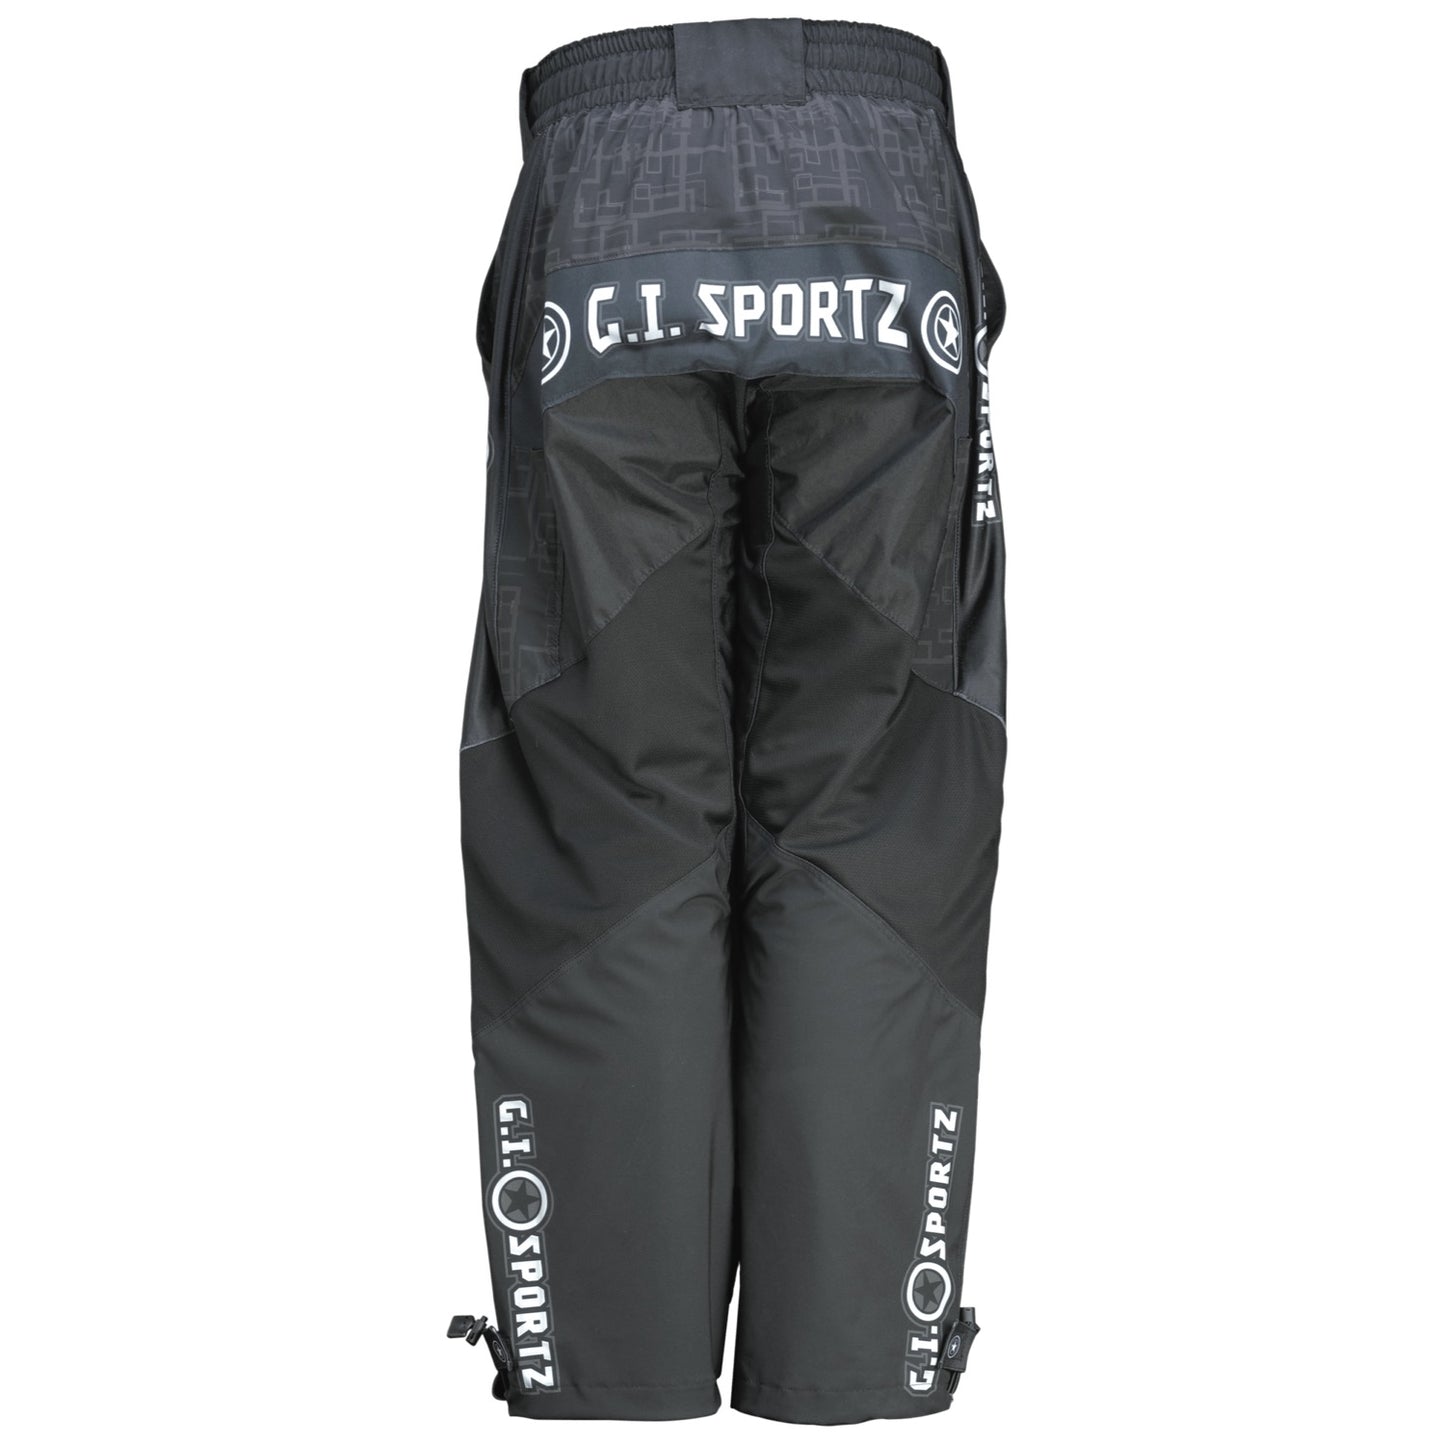 G.I. Sportz Glide Series Paintball Pants